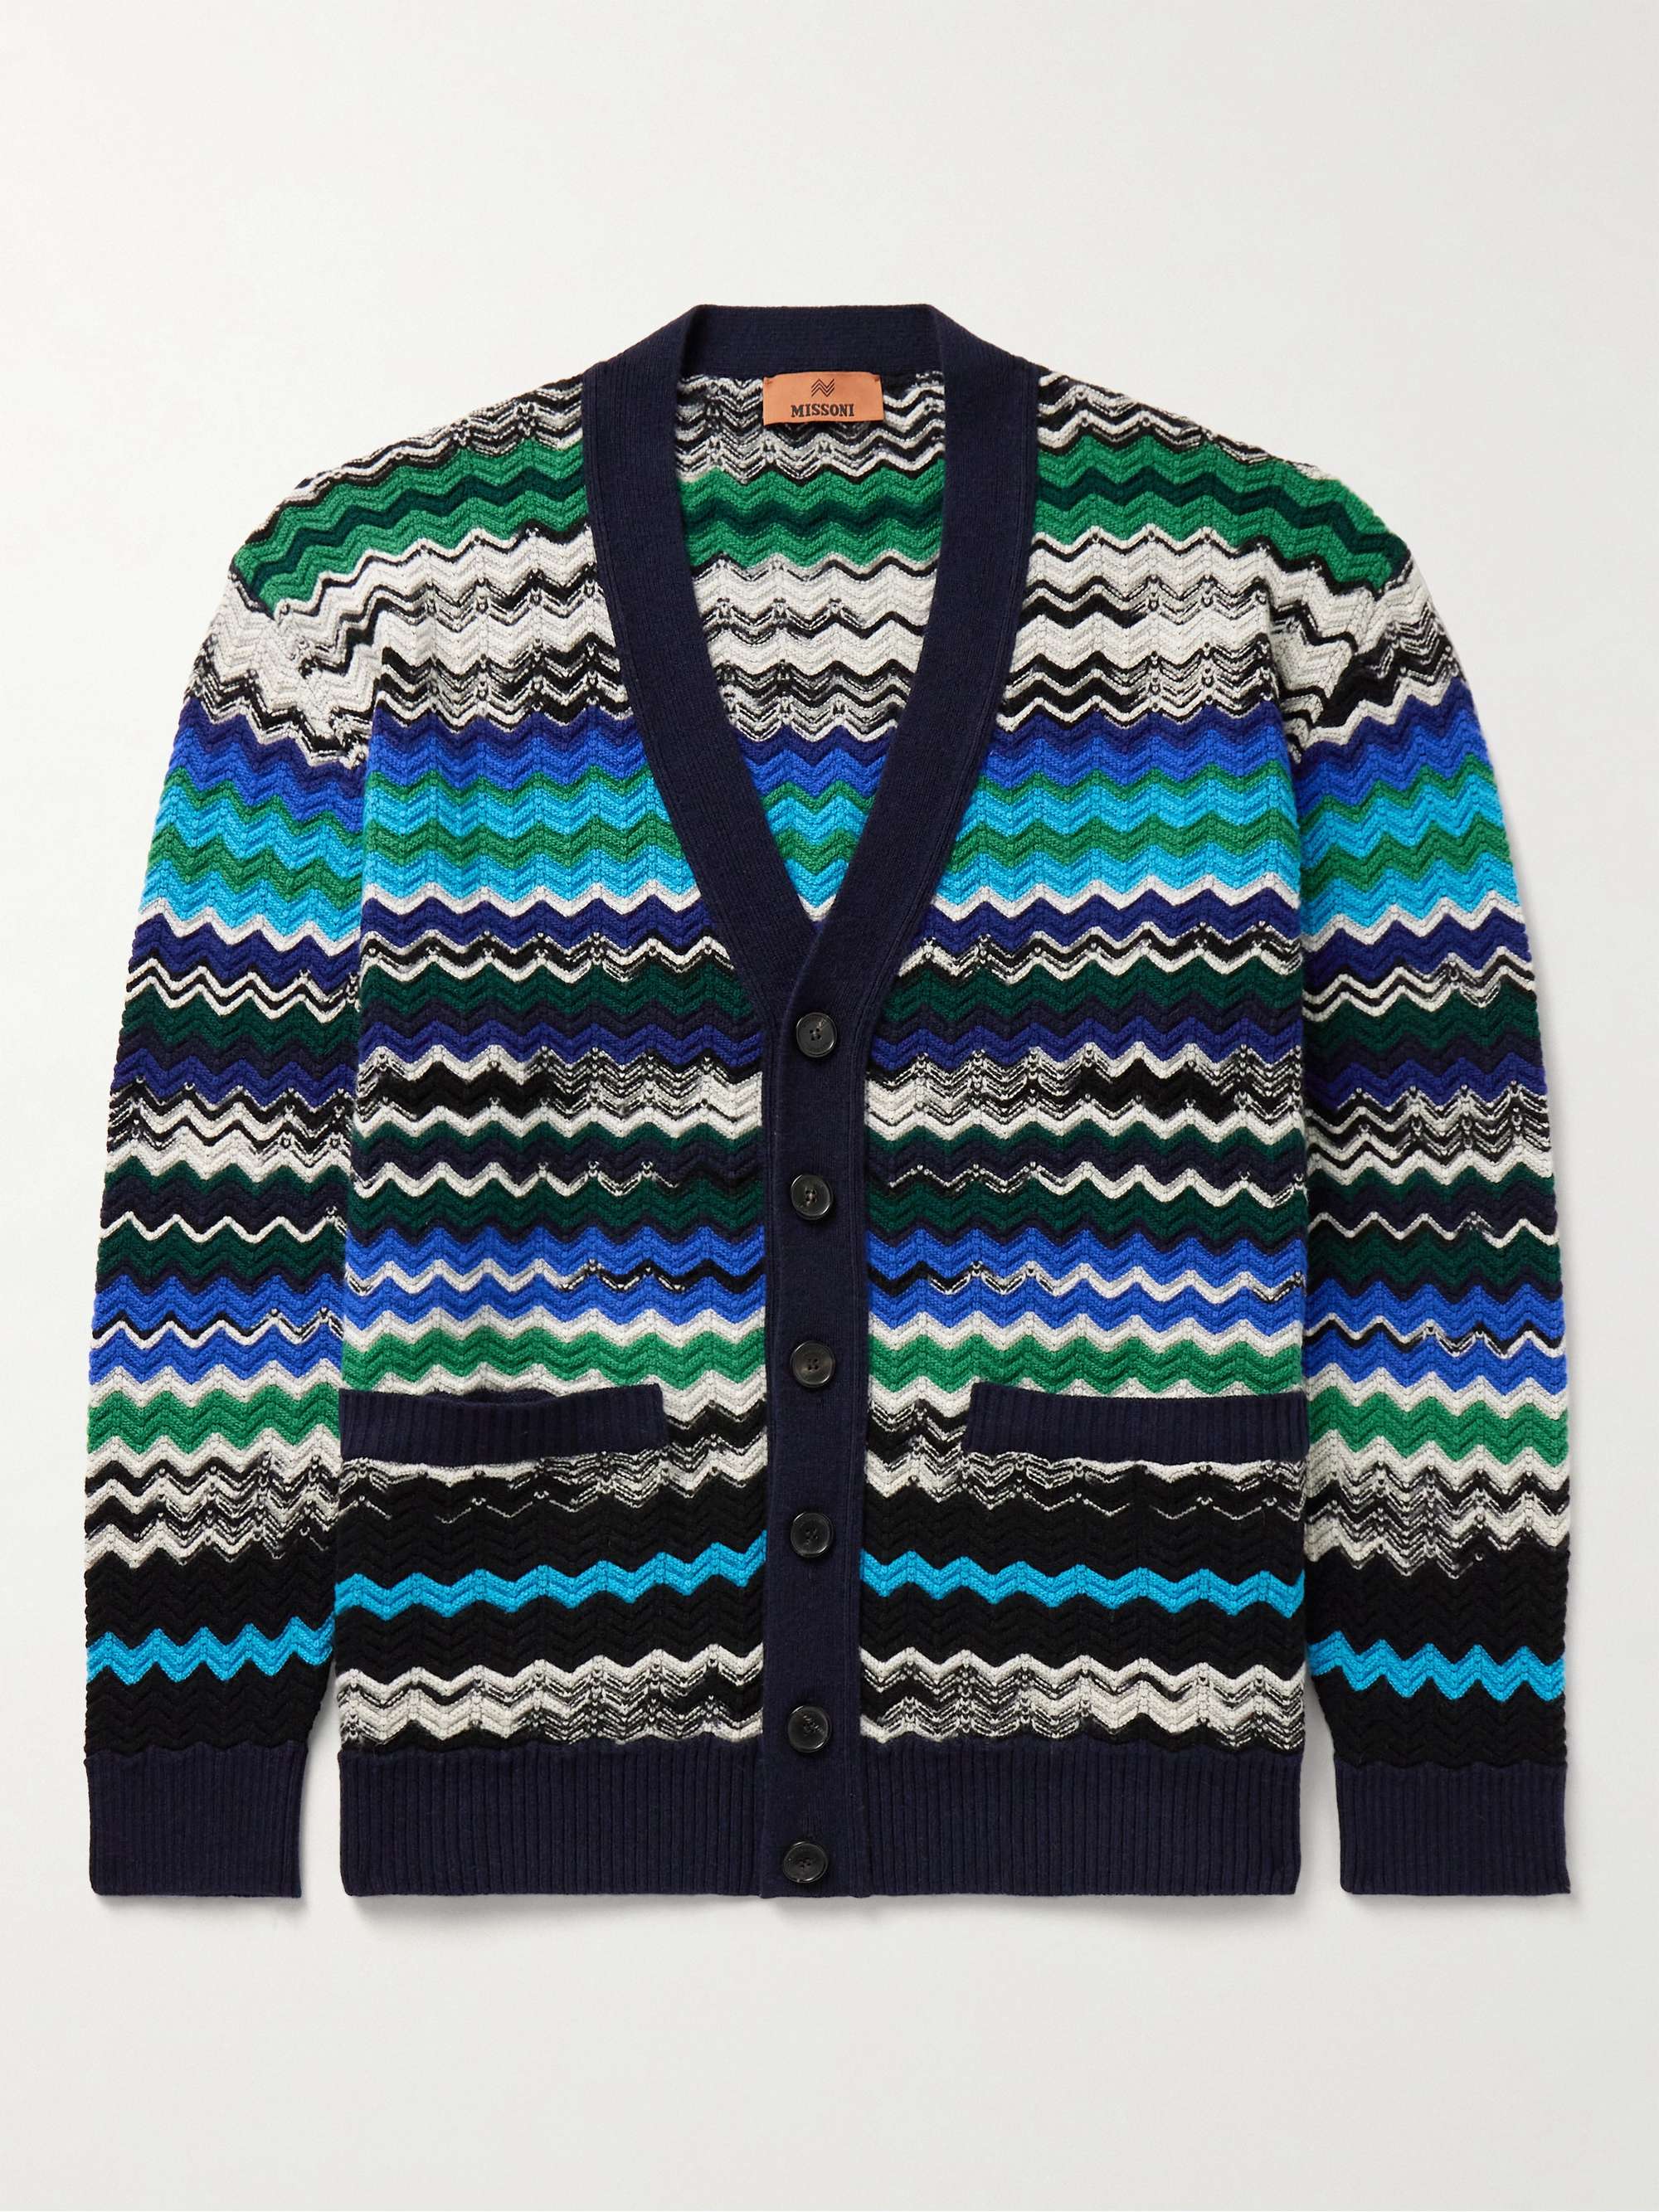 MISSONI Striped Crocheted Wool-Blend Cardigan for Men | MR PORTER